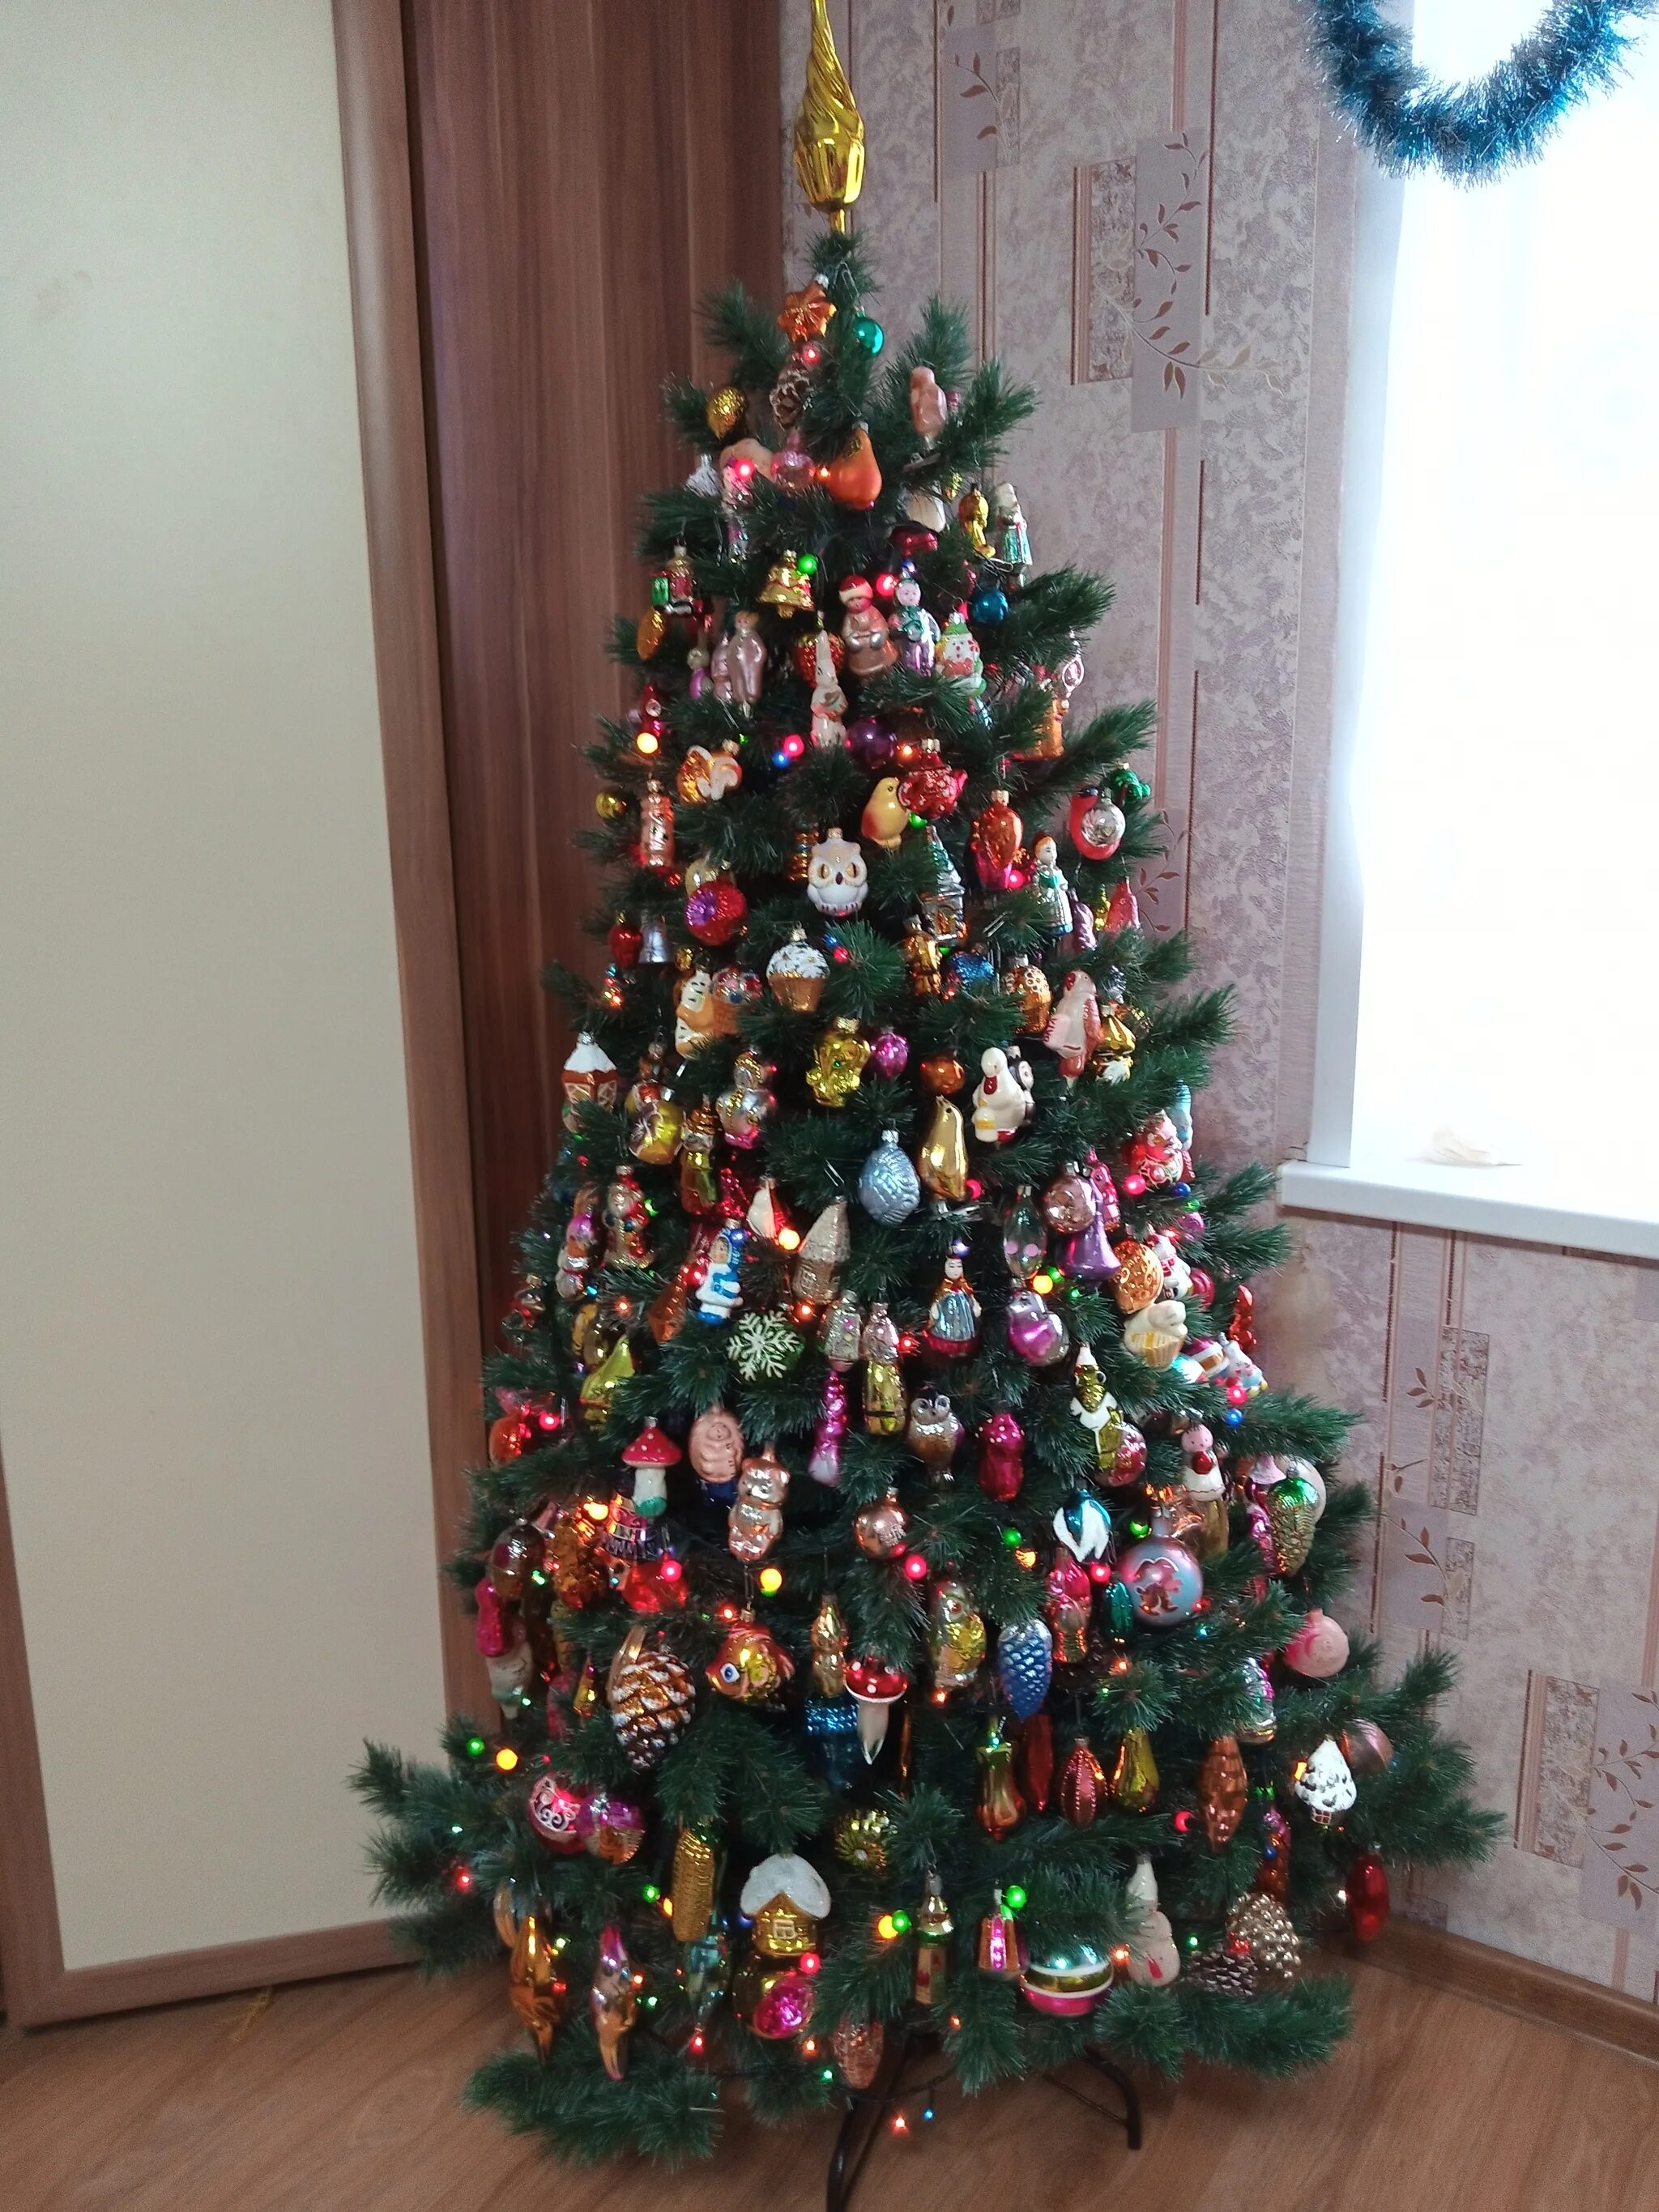 Елка с игрушками. Новогодние елки и игрушки. Советские игрушки на елку. Советские елки наряженные. Советскую елочку